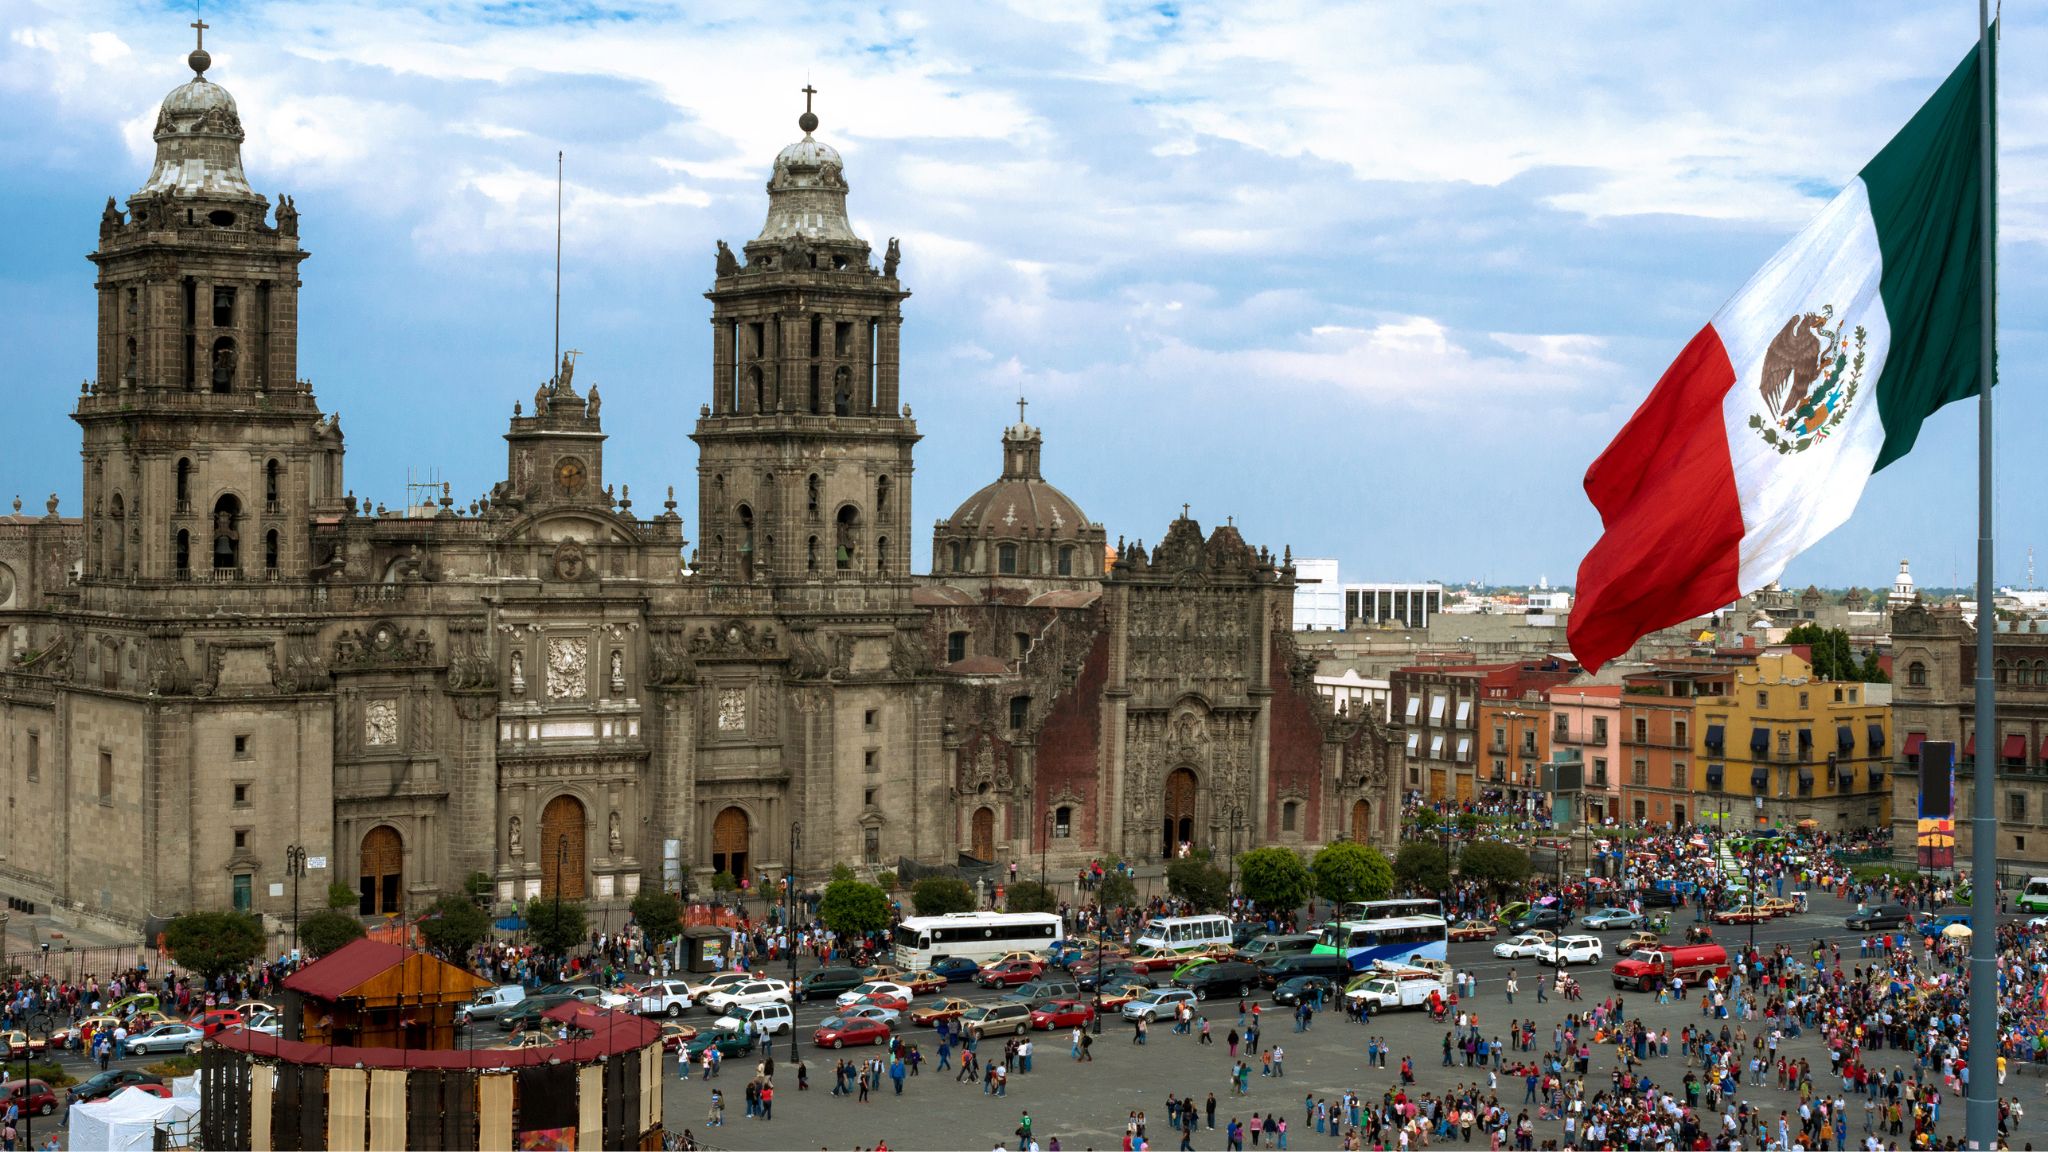 the Mexico City Metropolitan Cathedral